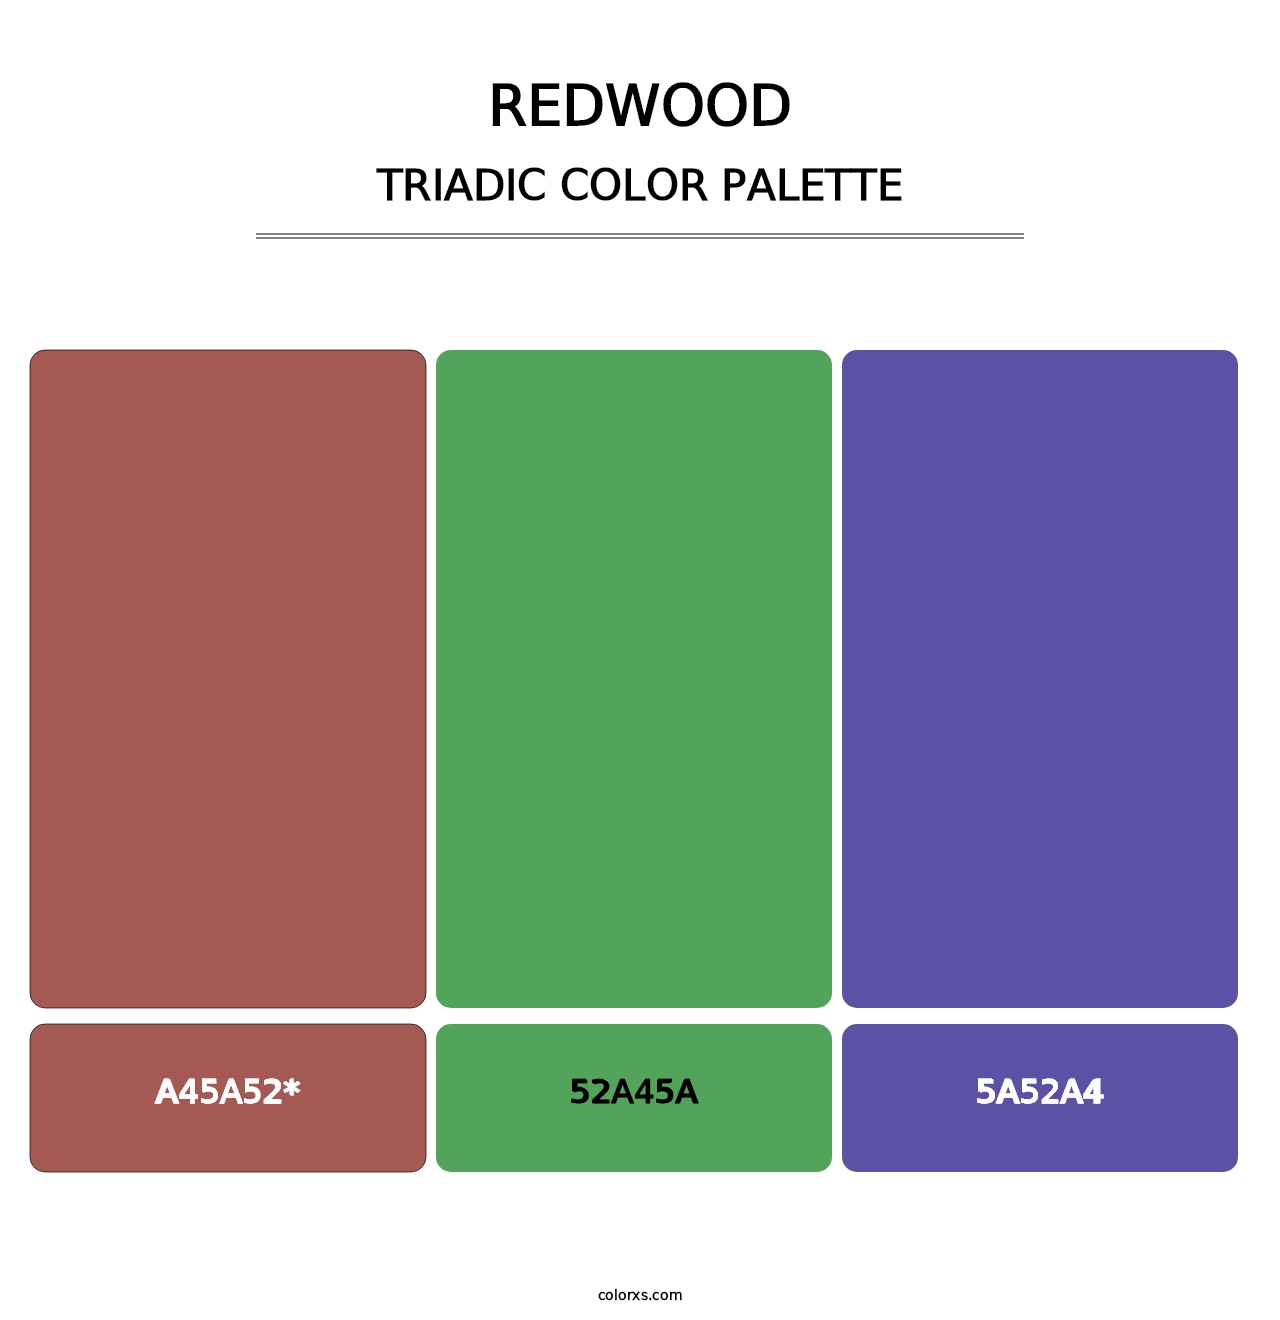 Redwood - Triadic Color Palette